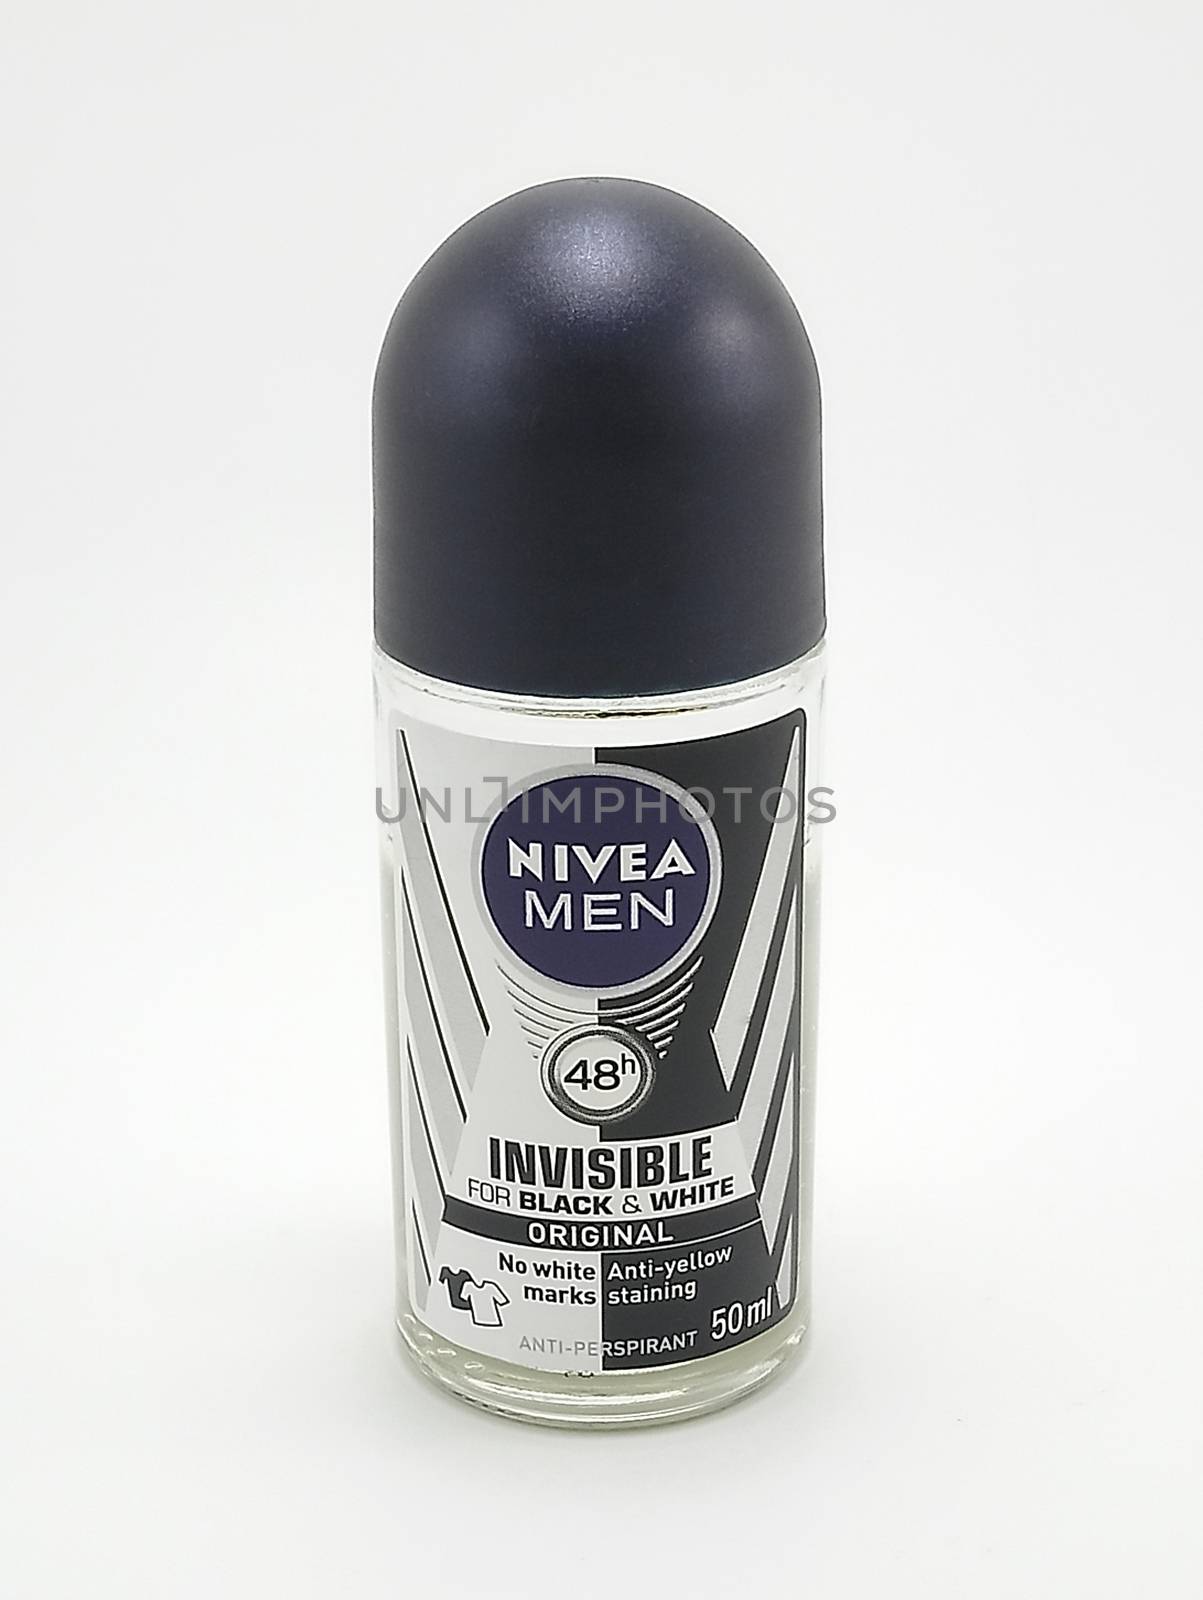 MANILA, PH - JUNE 23 - Nivea men invisible for black and white original deodorant on June 23, 2020 in Manila, Philippines.